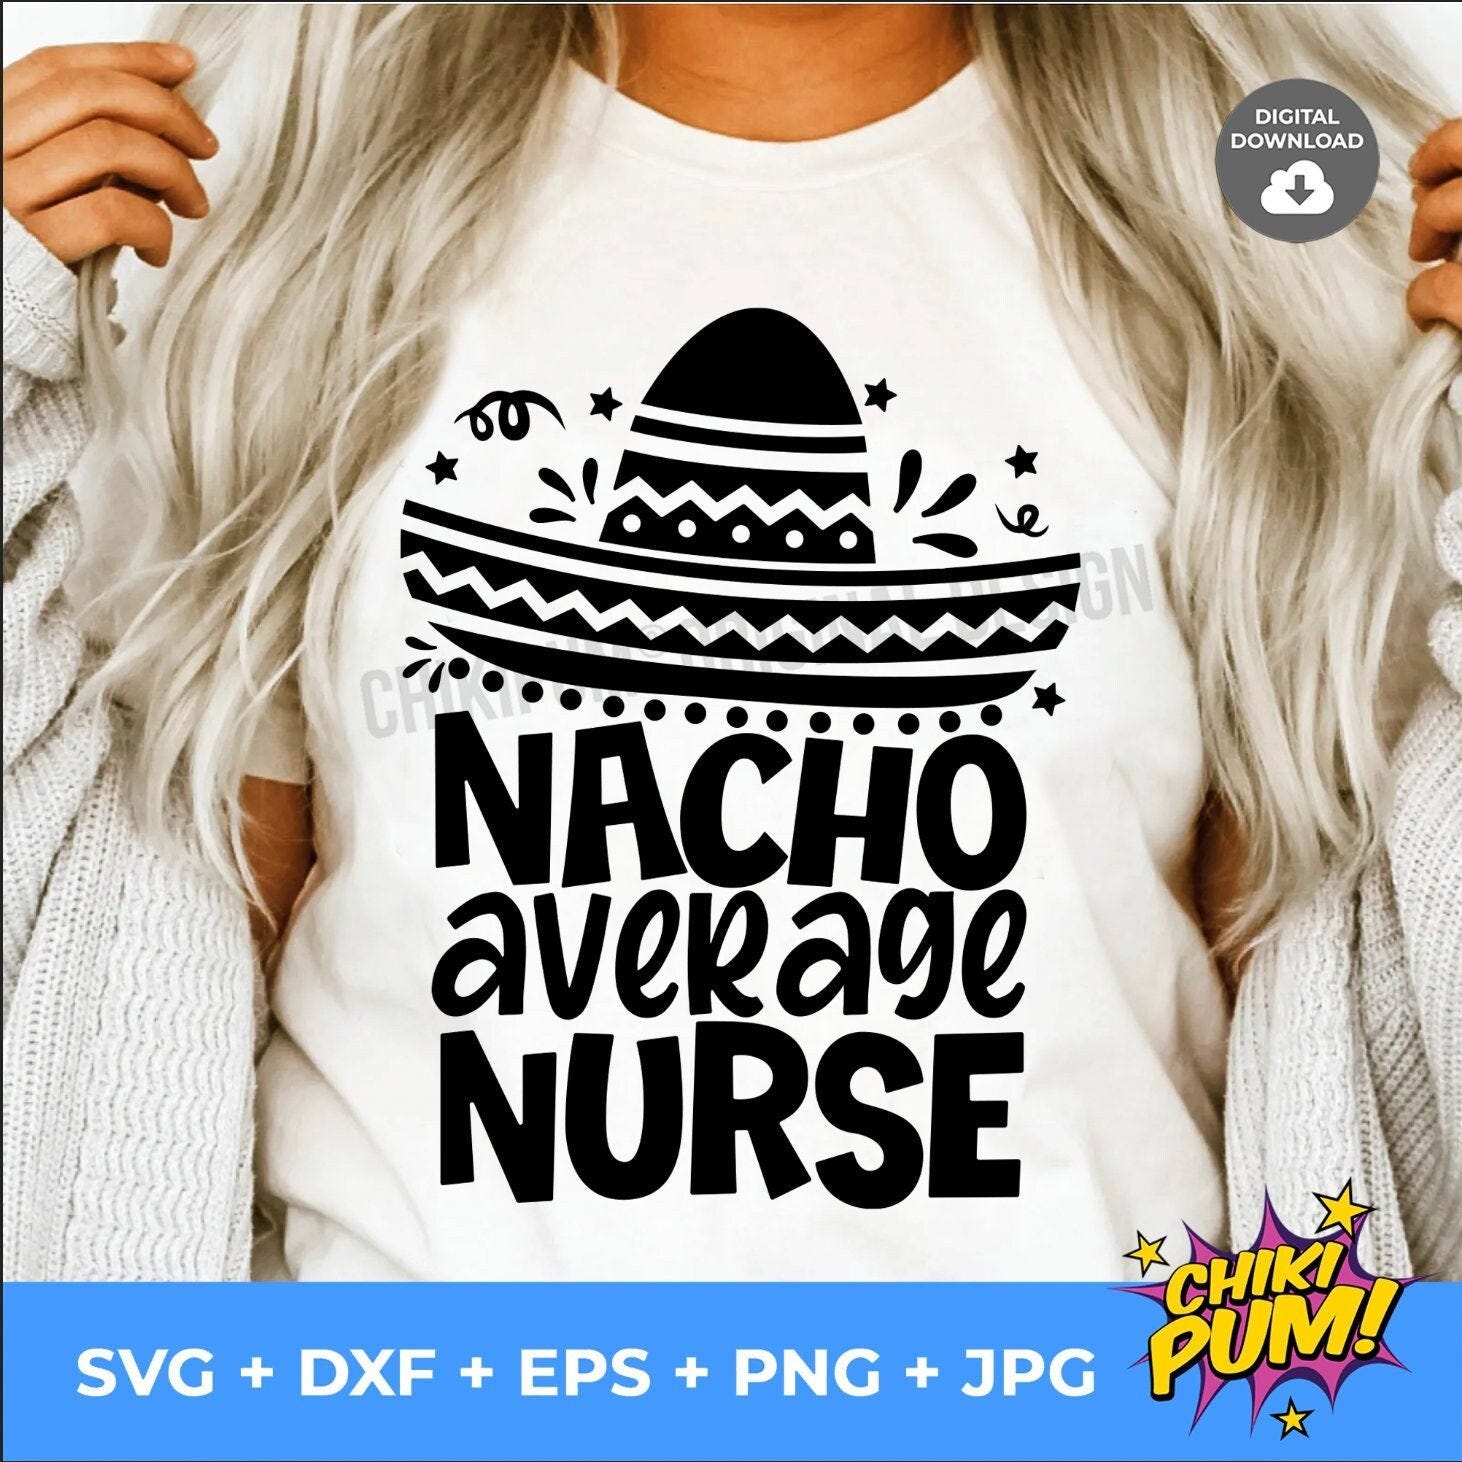 Nacho Average Nurse Svg, Cinco de Mayo Svg, Funny Sayings Svg, Dxf, Eps, Png Jpg, Nurse Quote Cut Files, Nursing School, Silhouette, Cricut